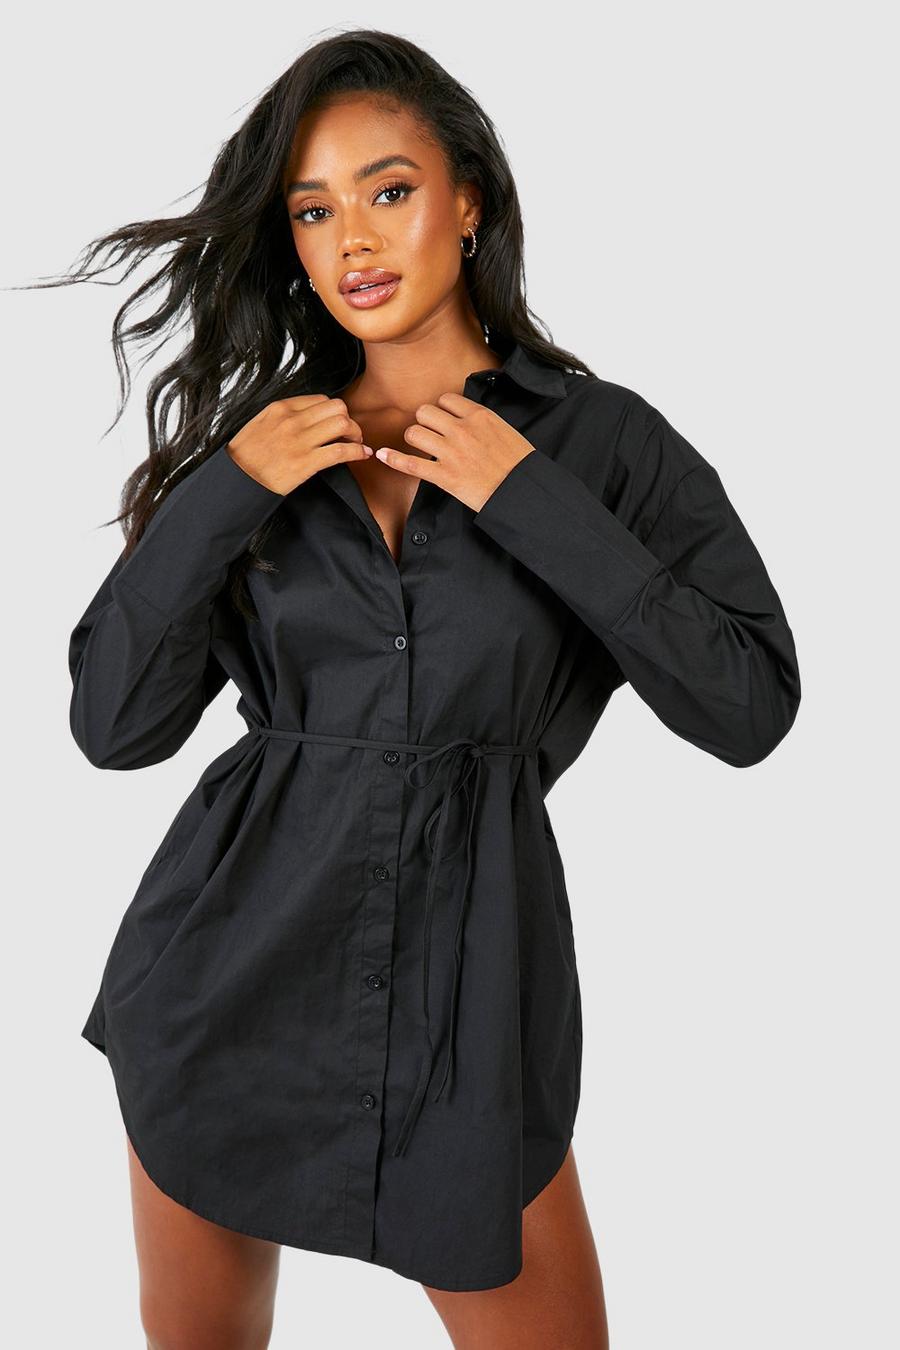 Black Sweatshirt com capucho Identity Full Zip cinzento mulher image number 1